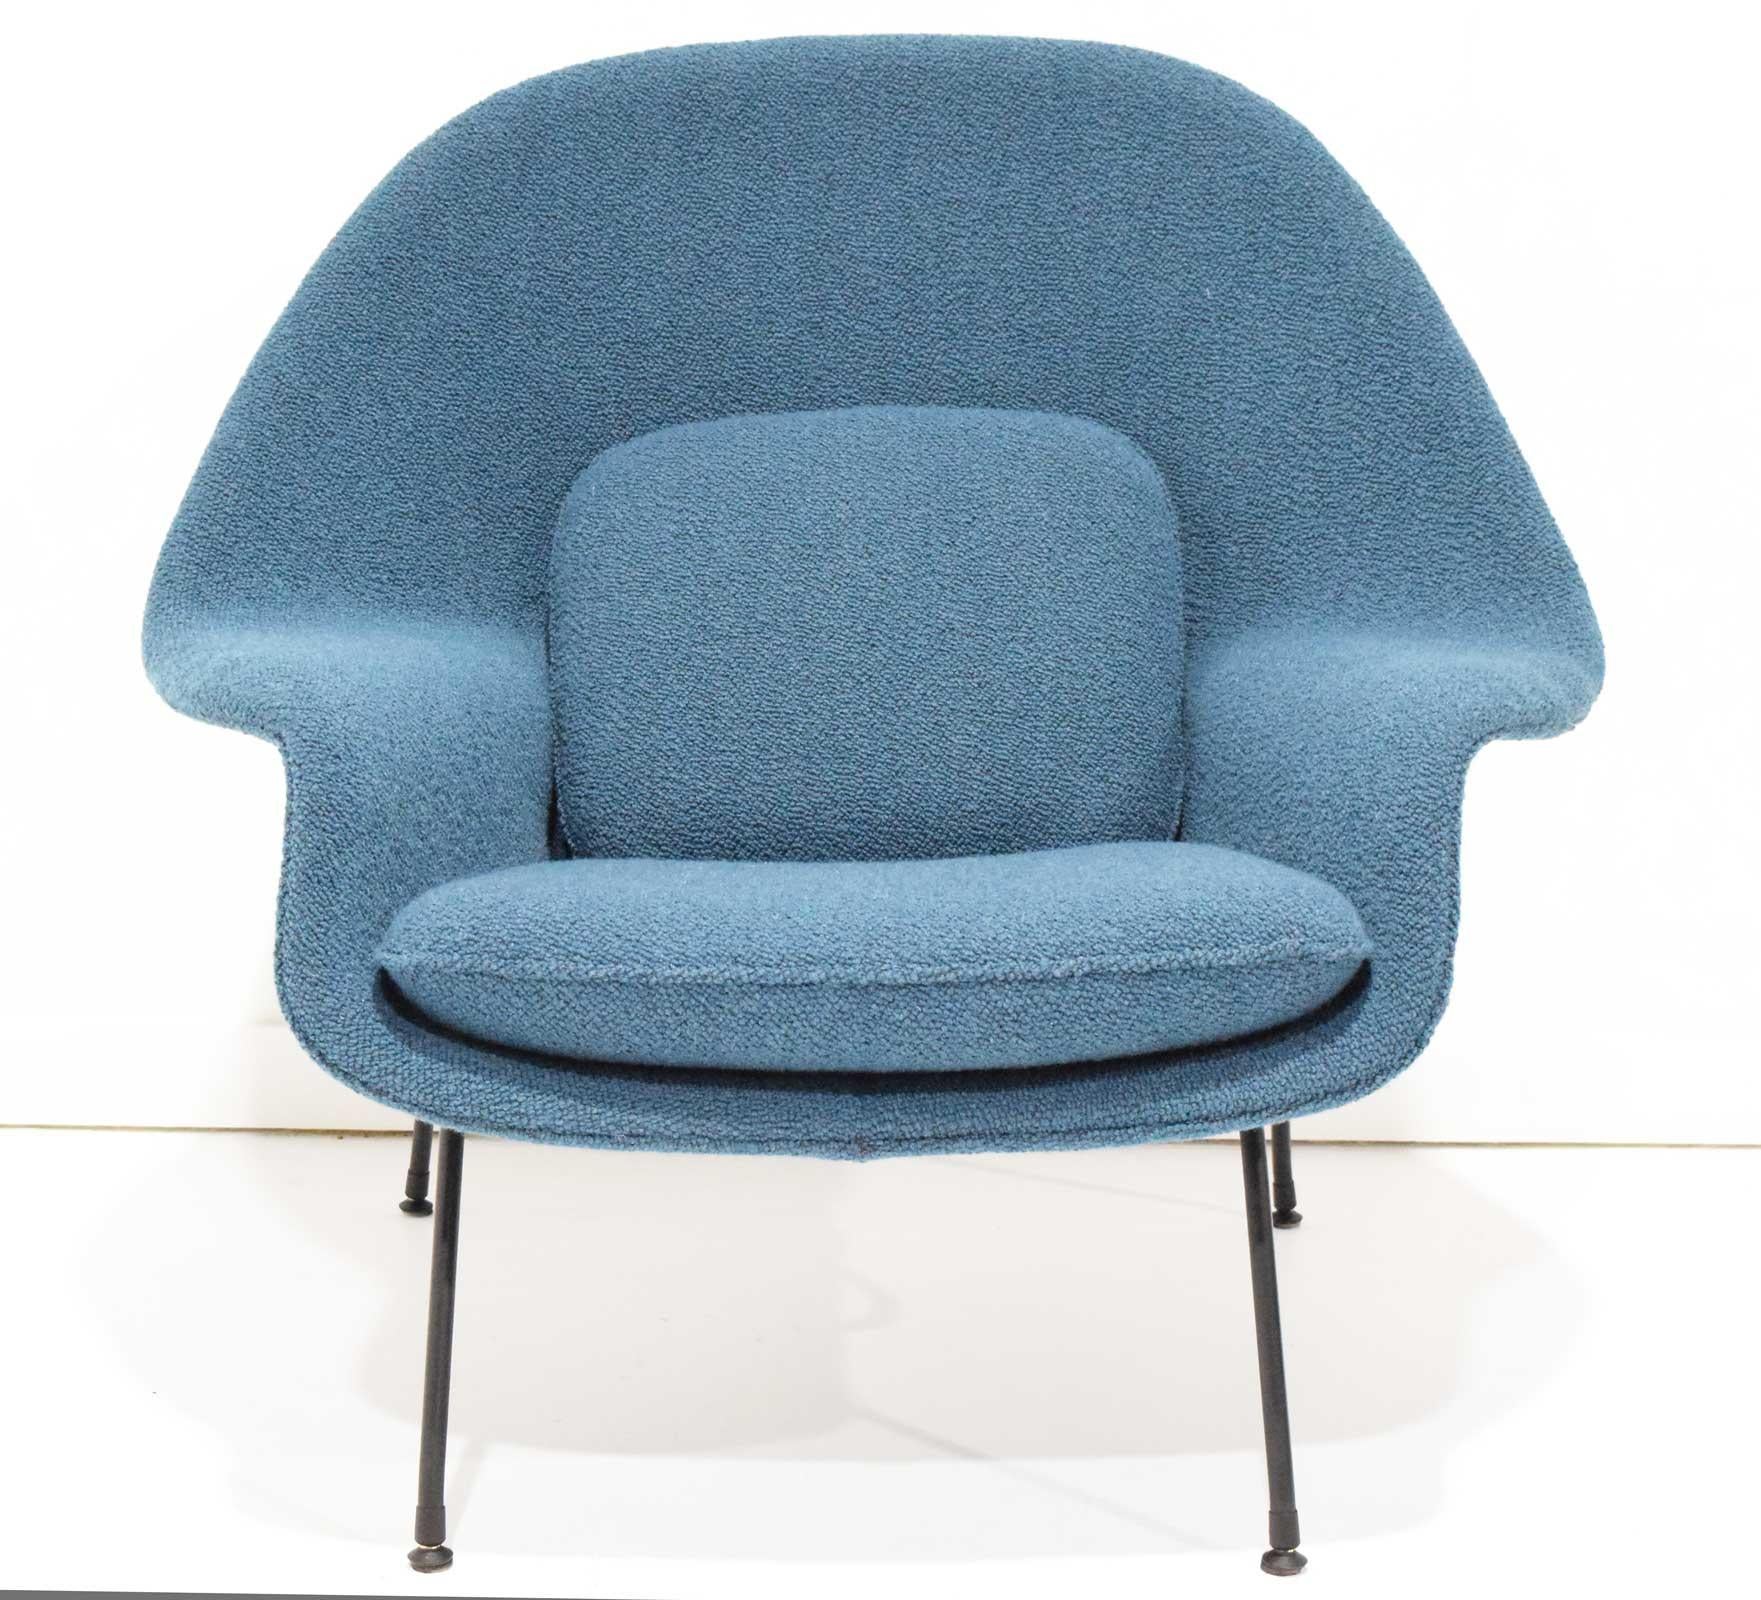 20th Century Eero Saarinen for Knoll Early Womb Chair in new Larsen Upholstery